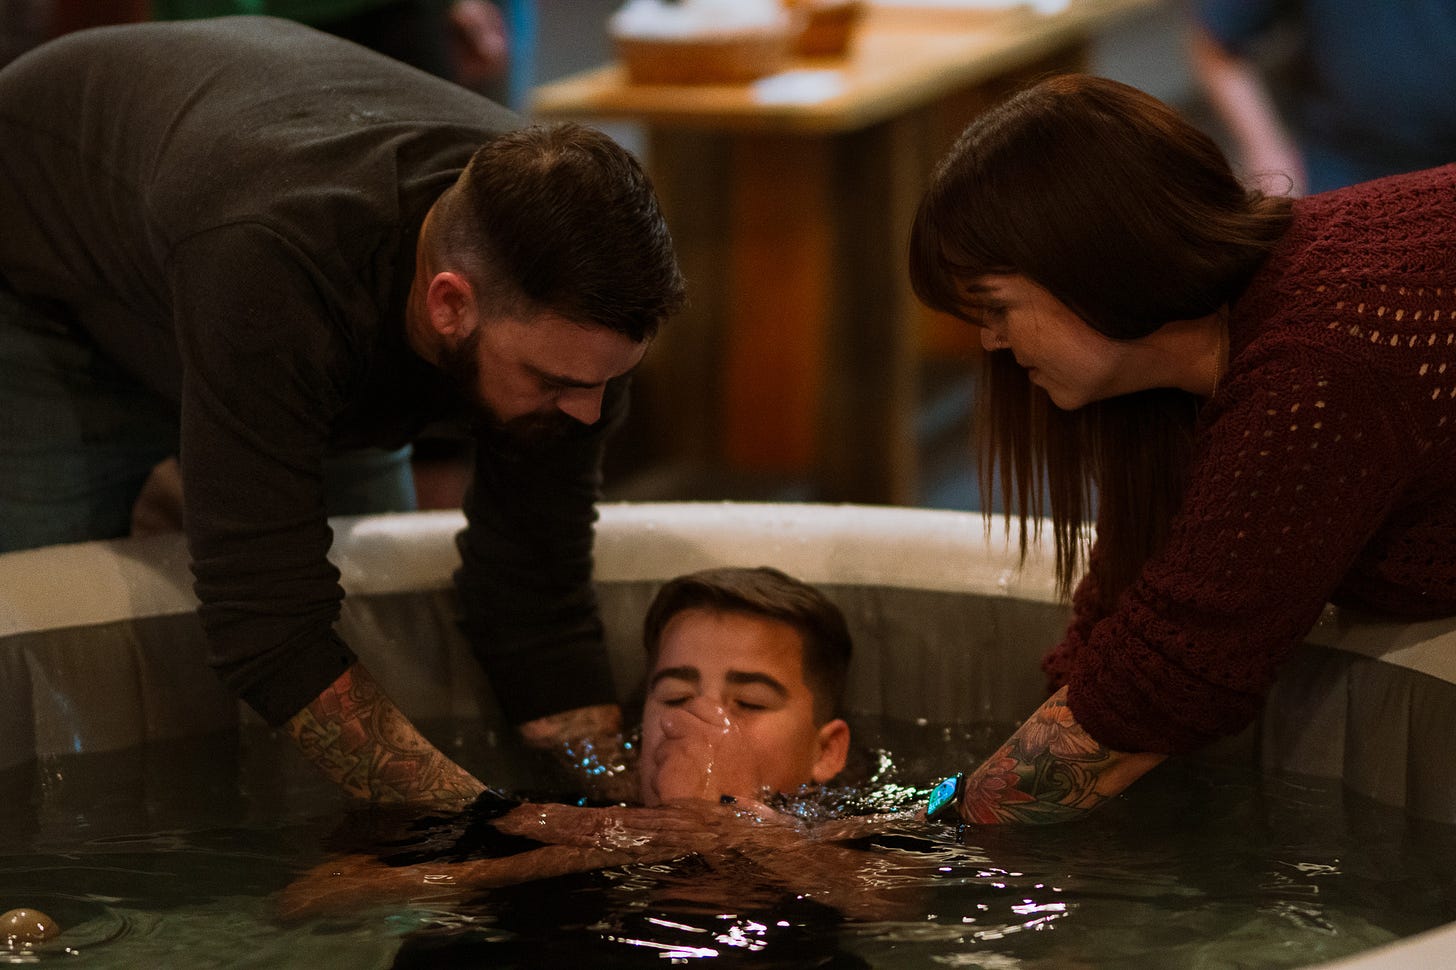 Ronnie & Cylia baptizing their son